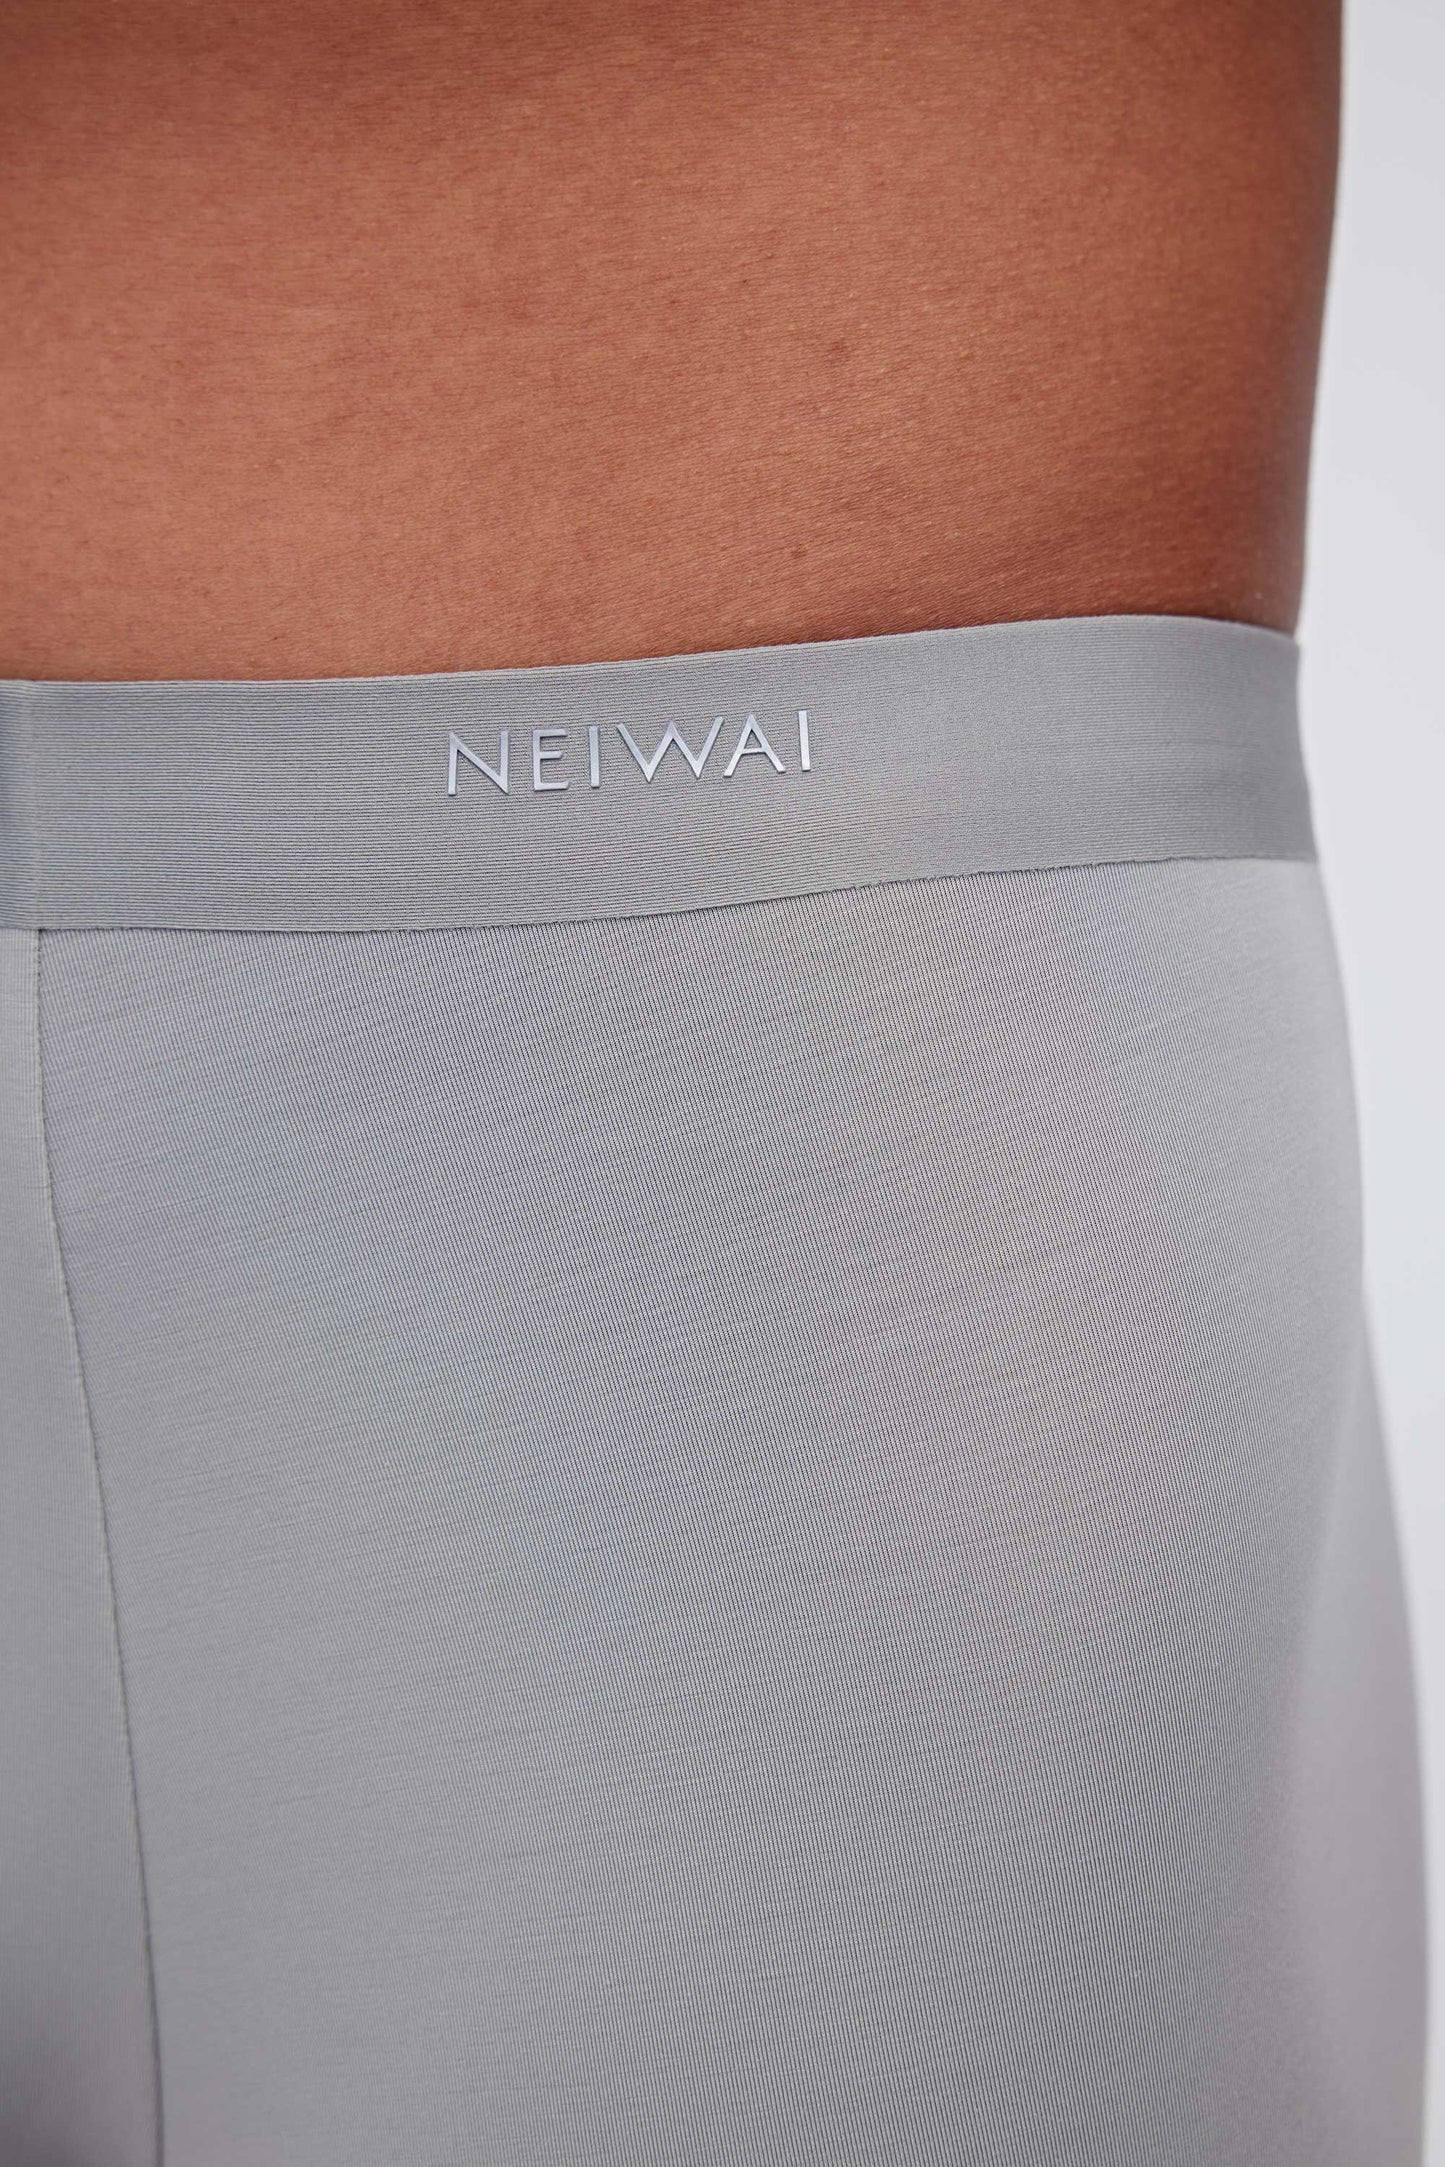 close up of the brief waist with NEIWAI logo